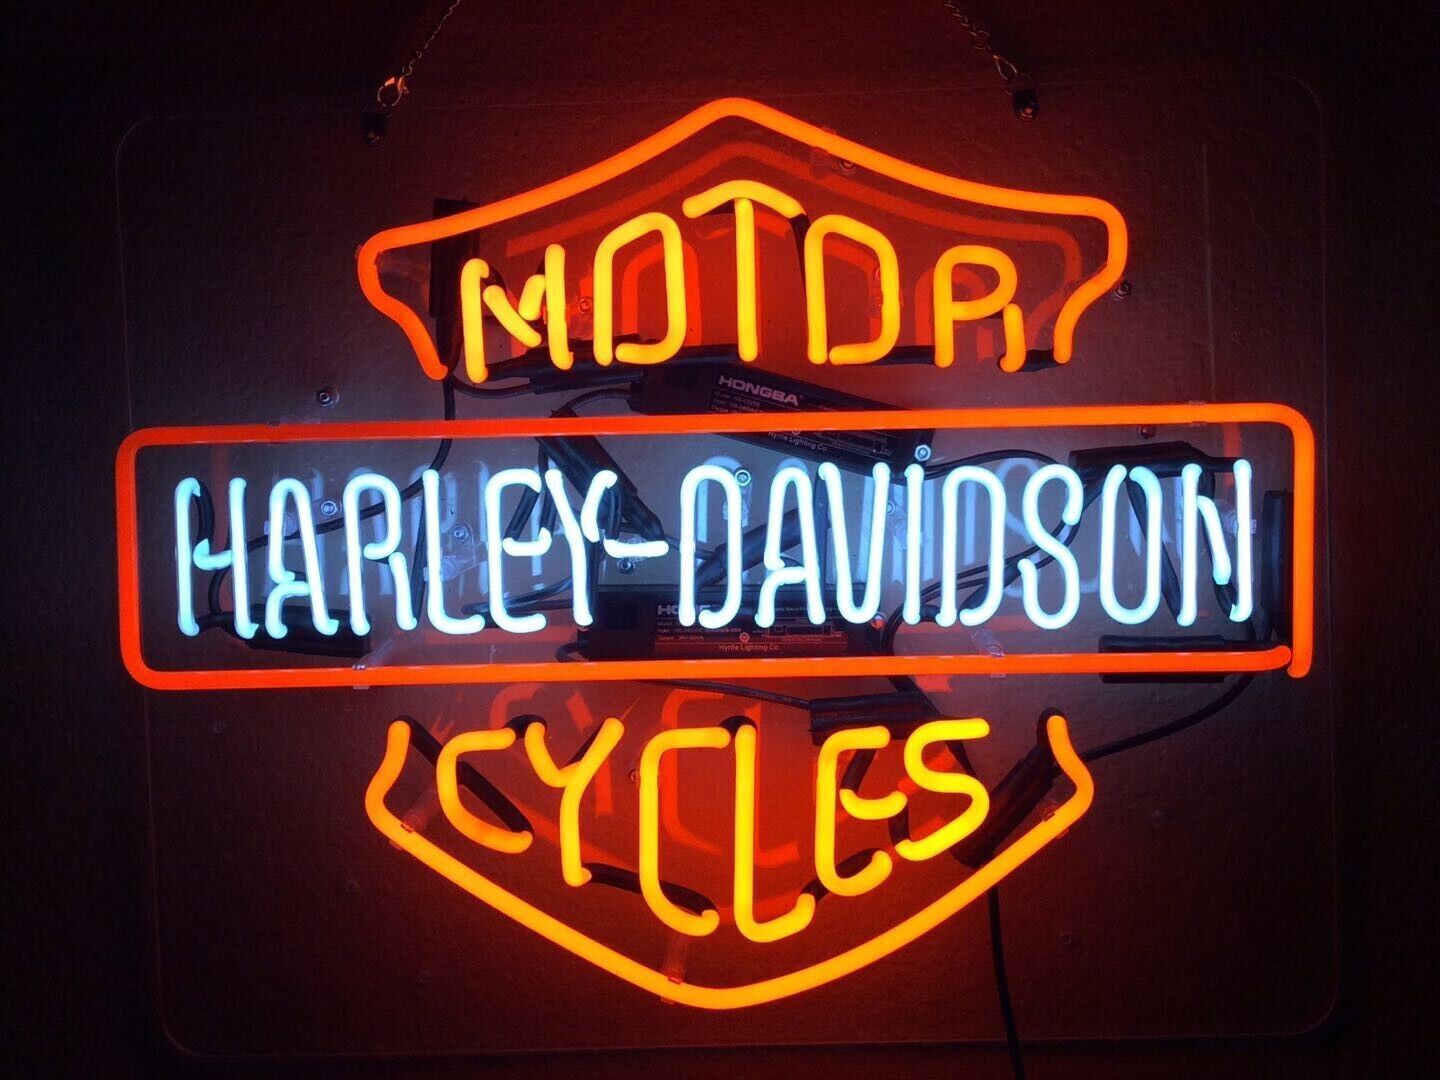 Harley-Davidson HD Motorcycle Neon Sign Light Lamp Garage Open US Stock